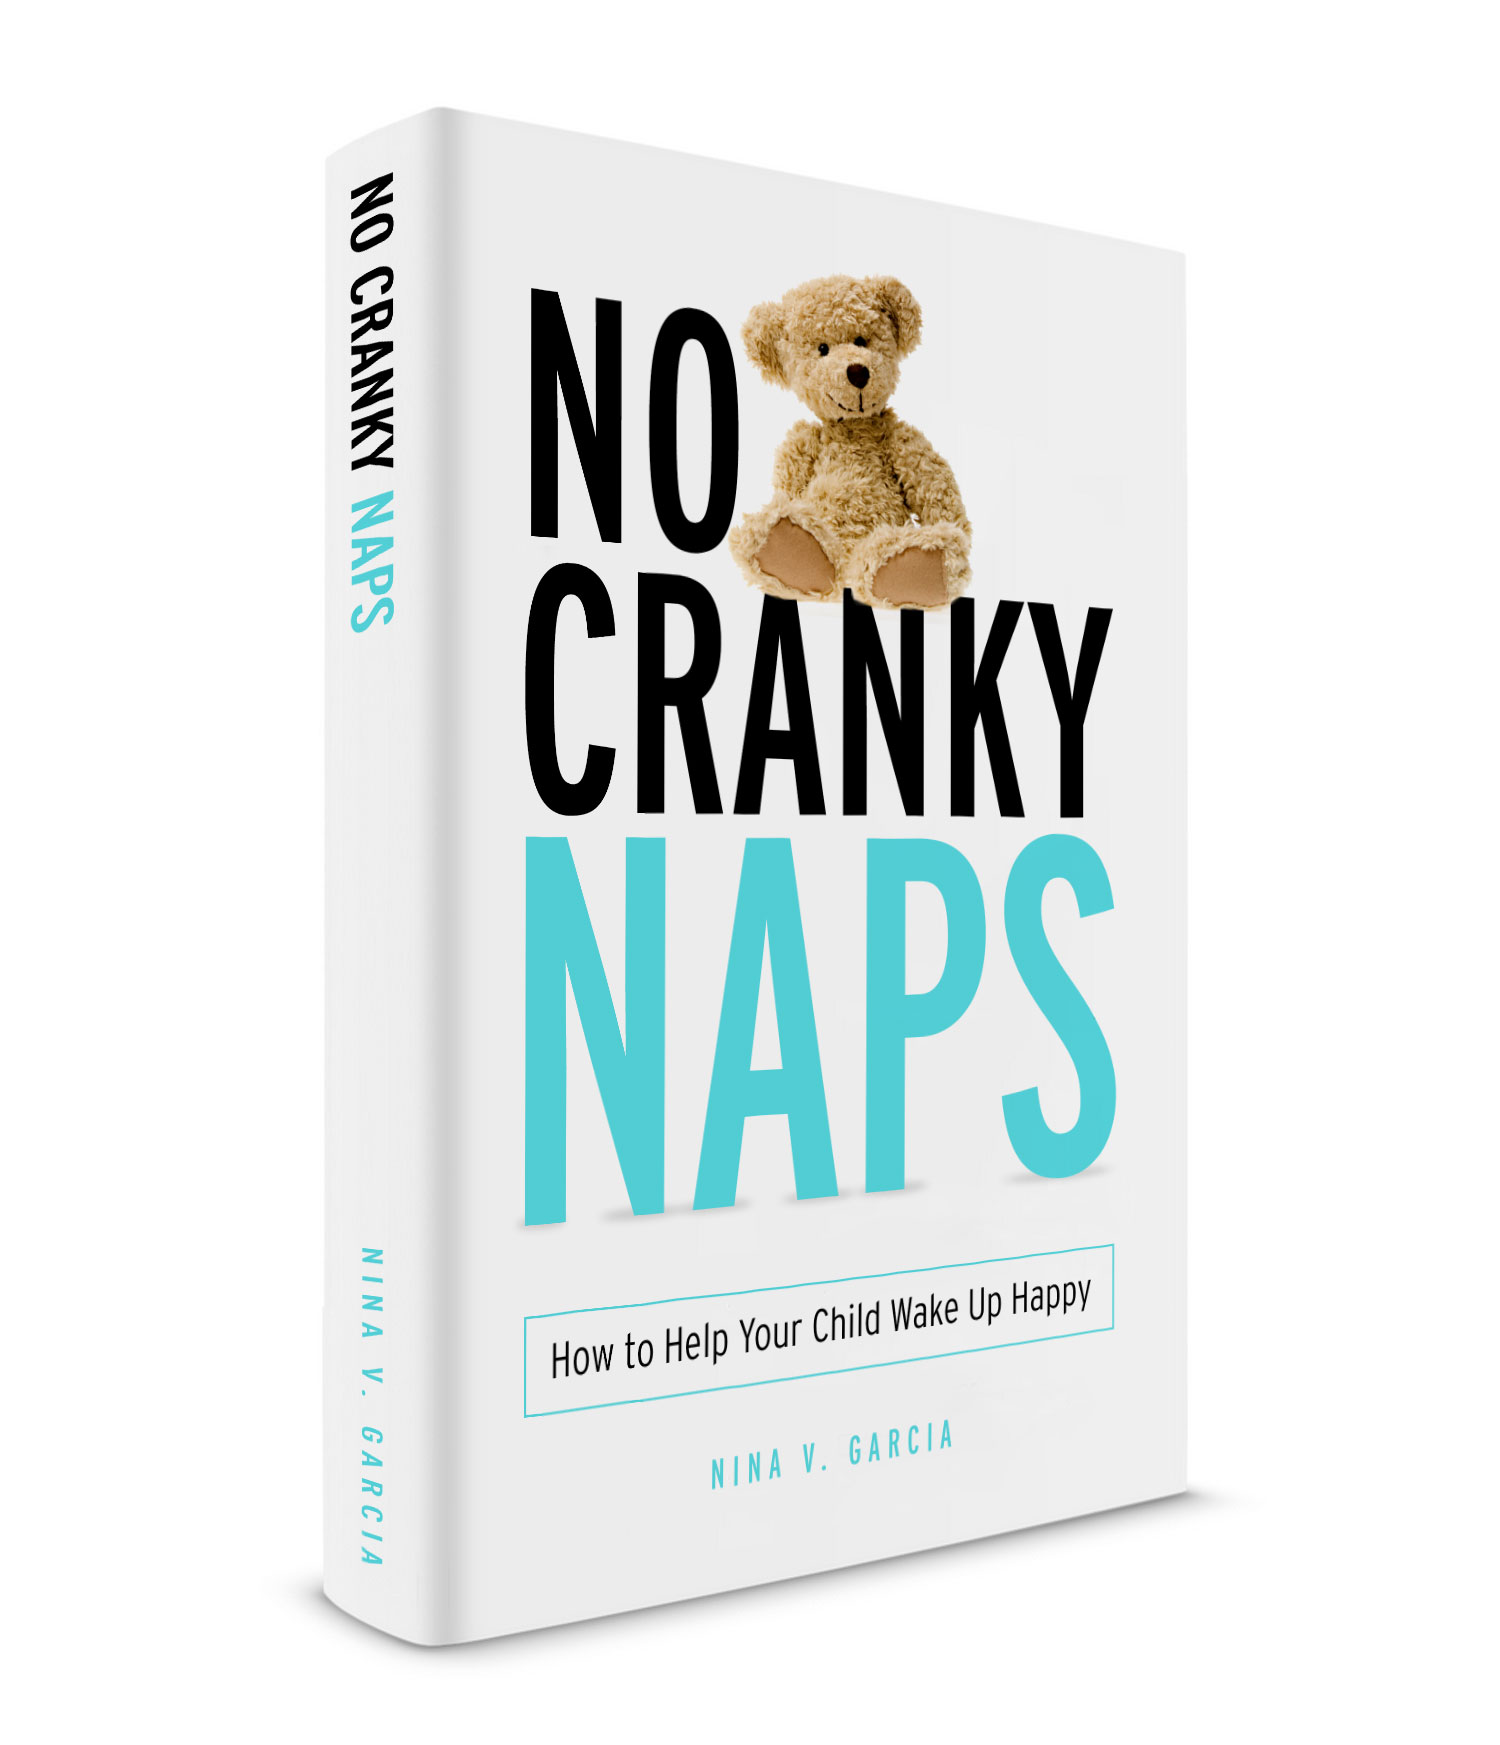 No Cranky Naps eBook to help your child wake up happy